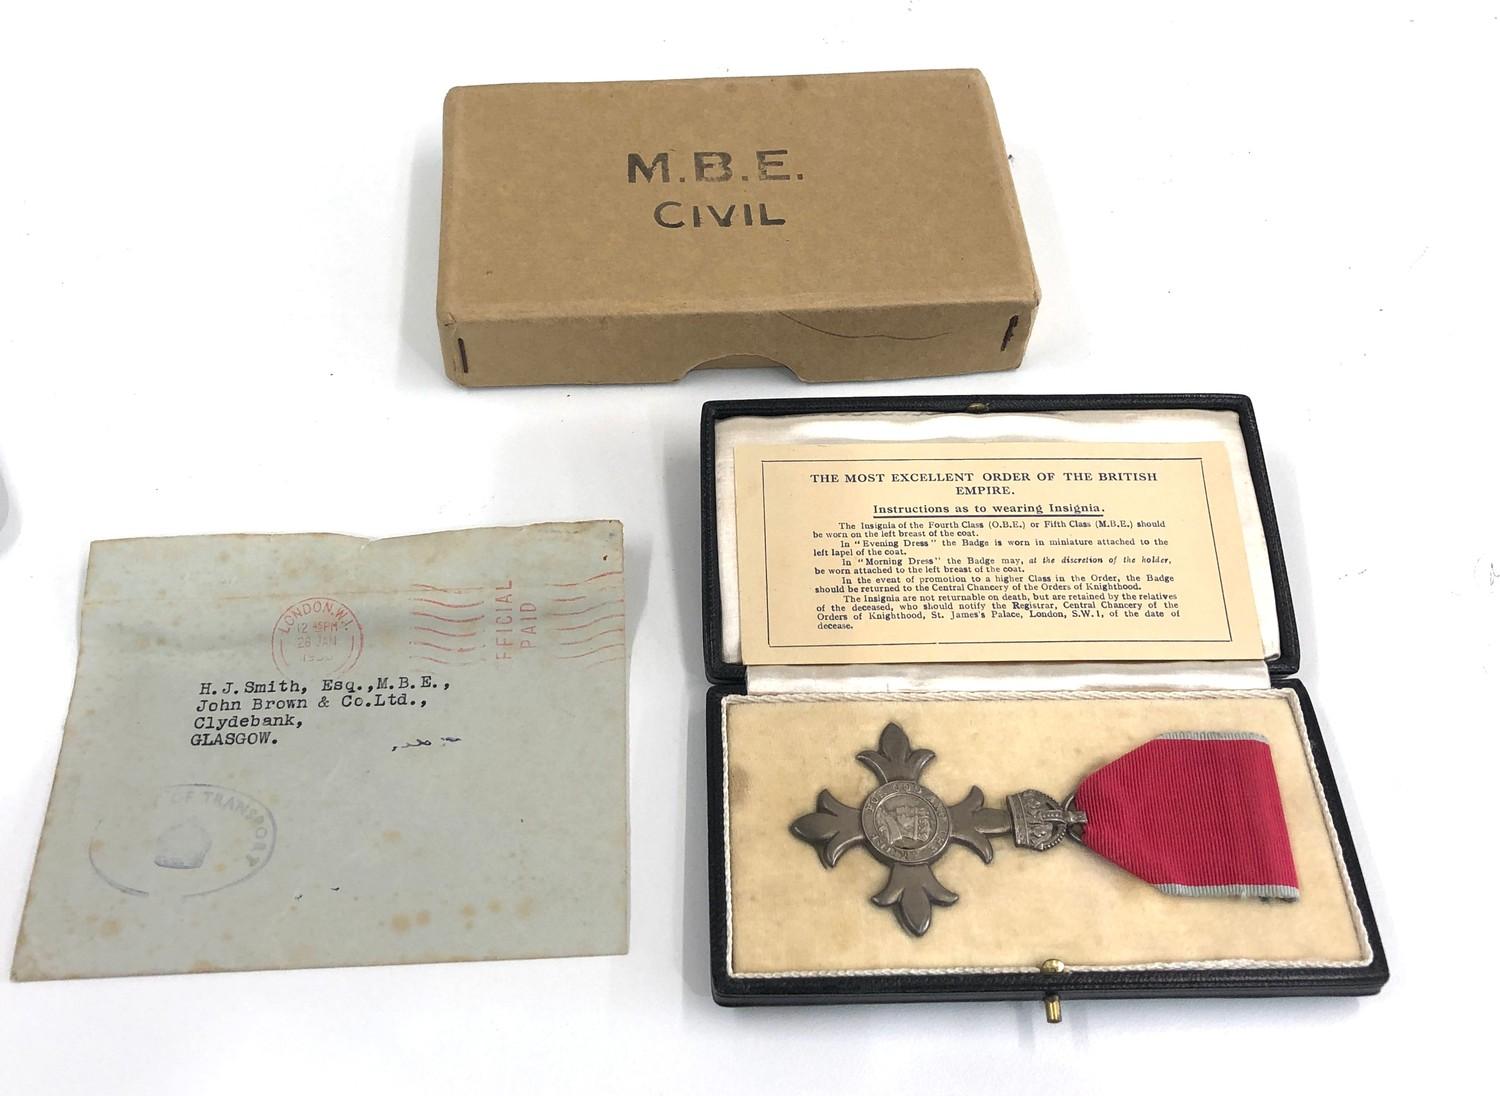 Civil M.B.E medal with both original boxes